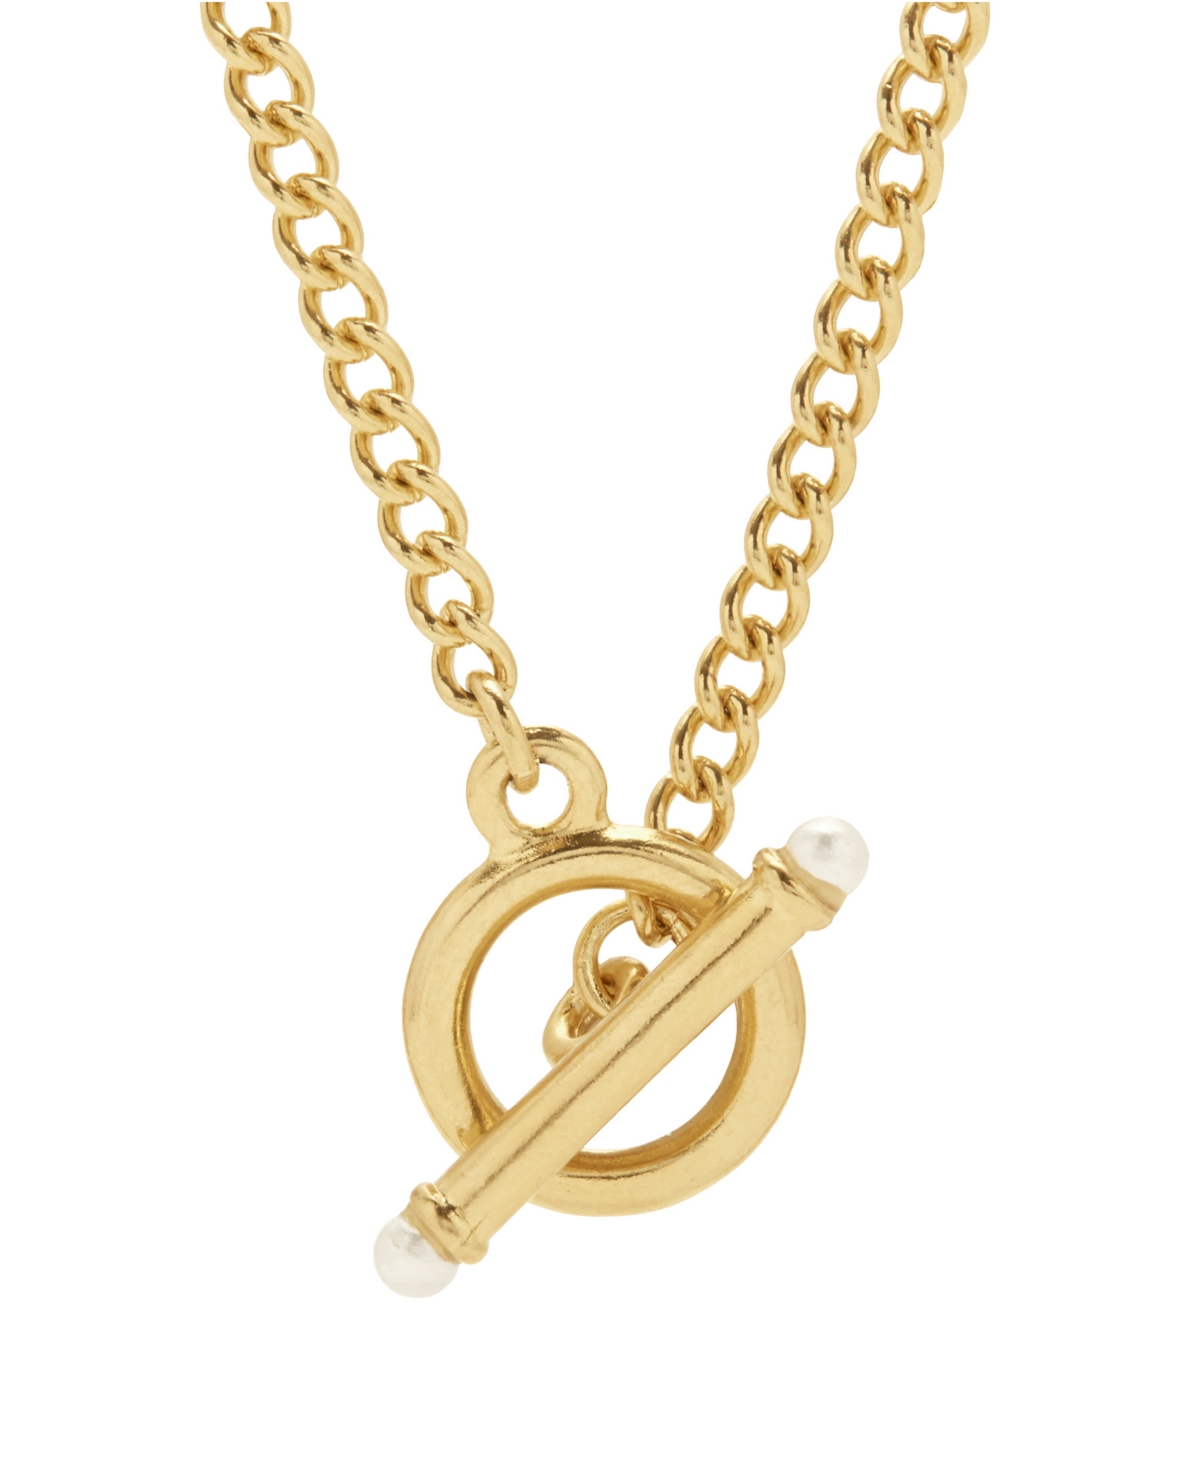 Stella Imitation Pearl Toggle Chain Necklace - Gold